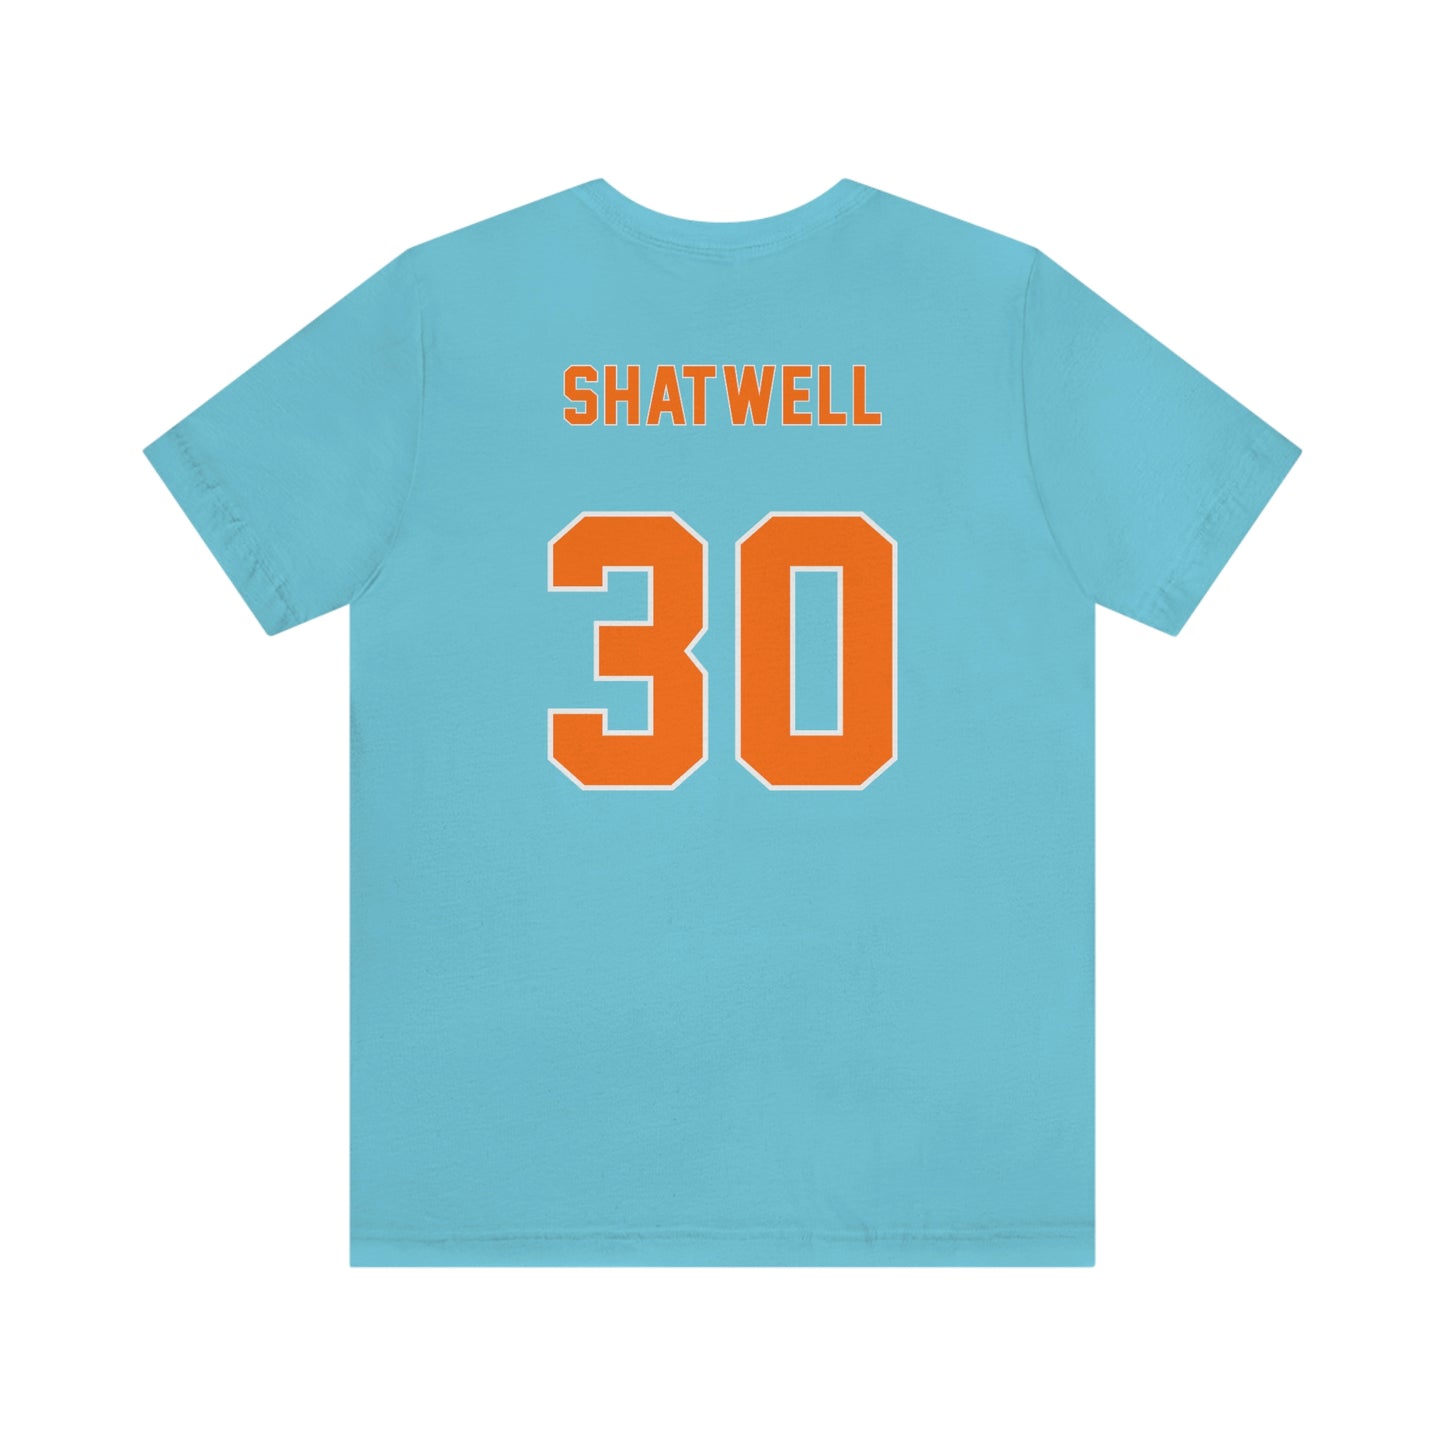 Kade Shatwell Unisex Jersey Shirt